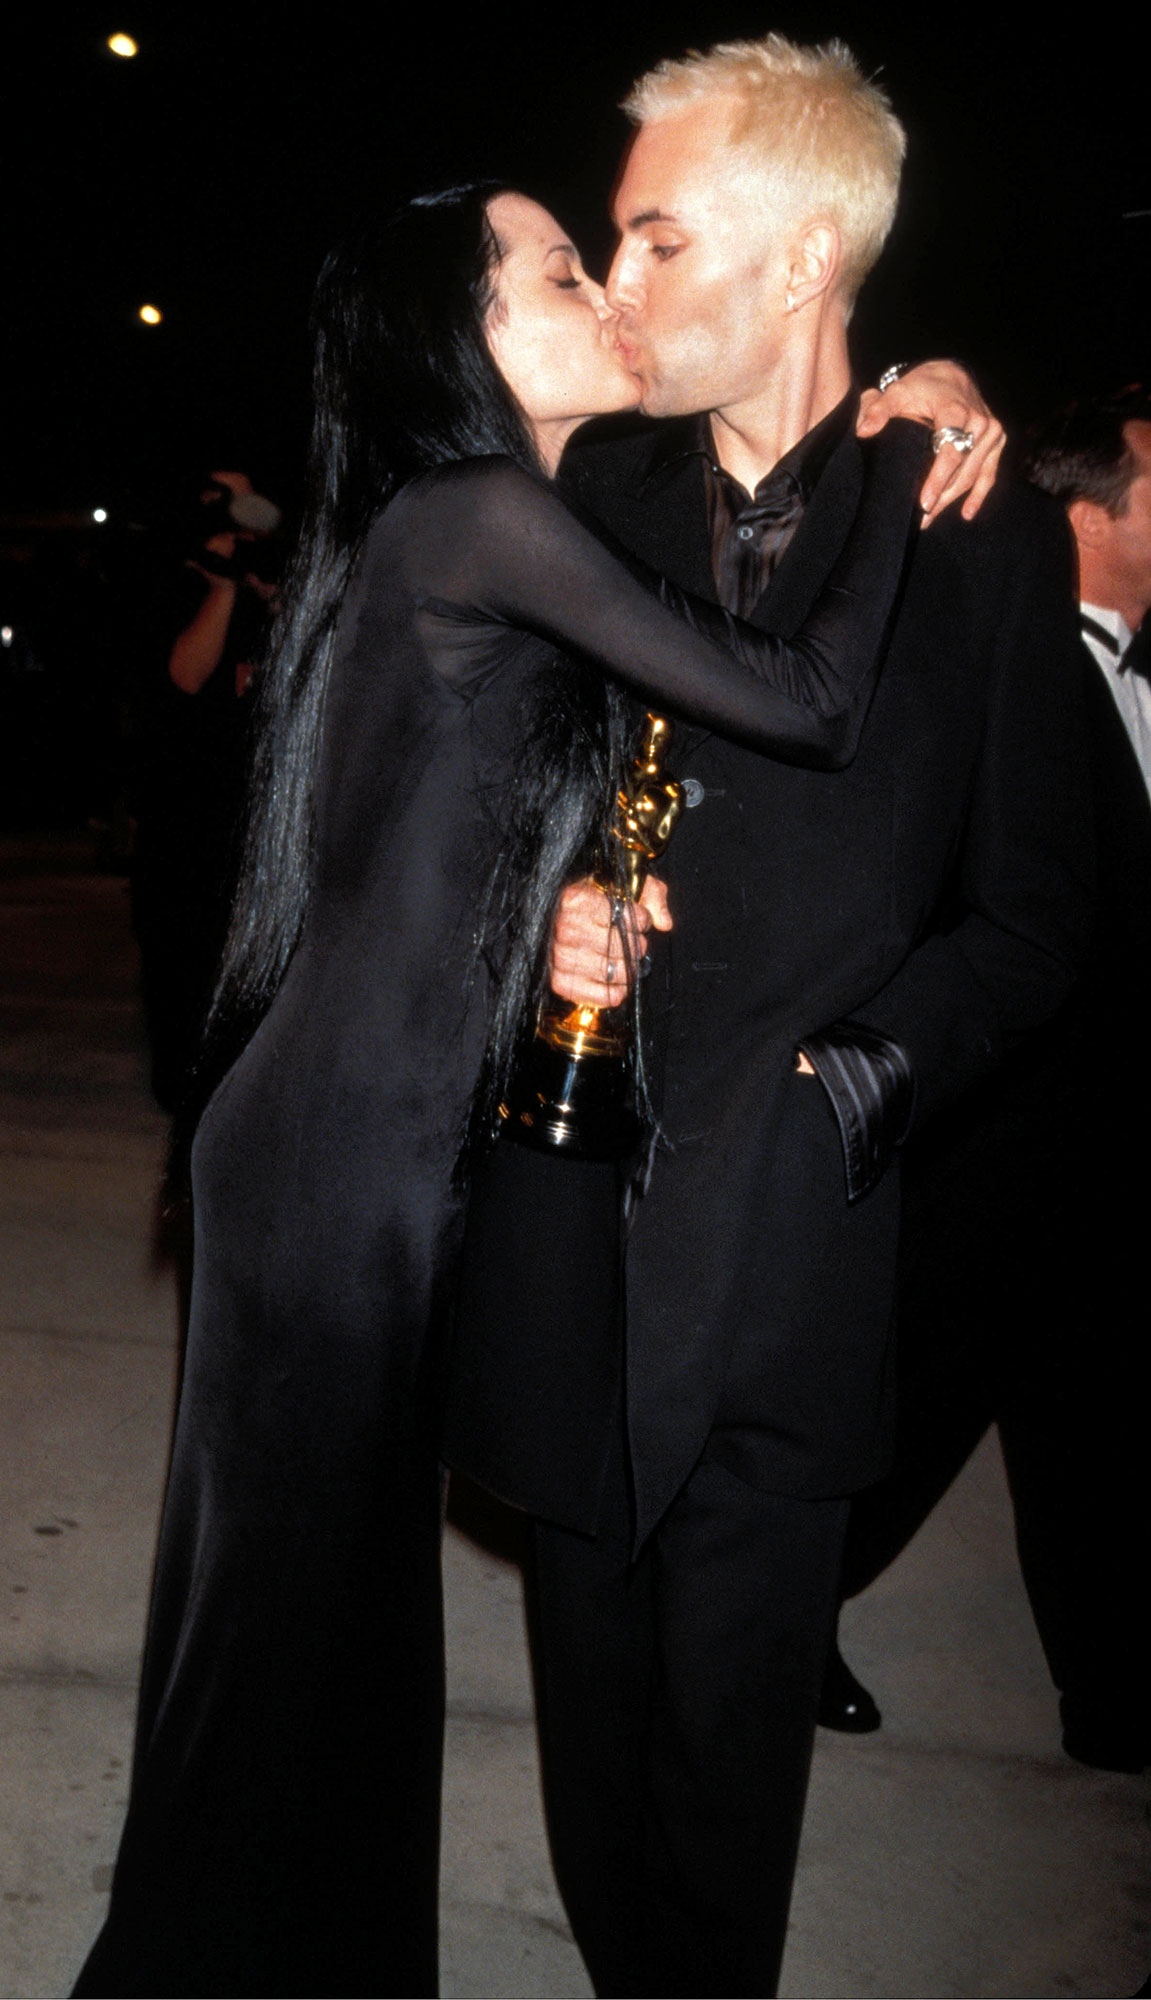 Angelina Jolies Oscar Kiss With Brother James Haven Turns 21